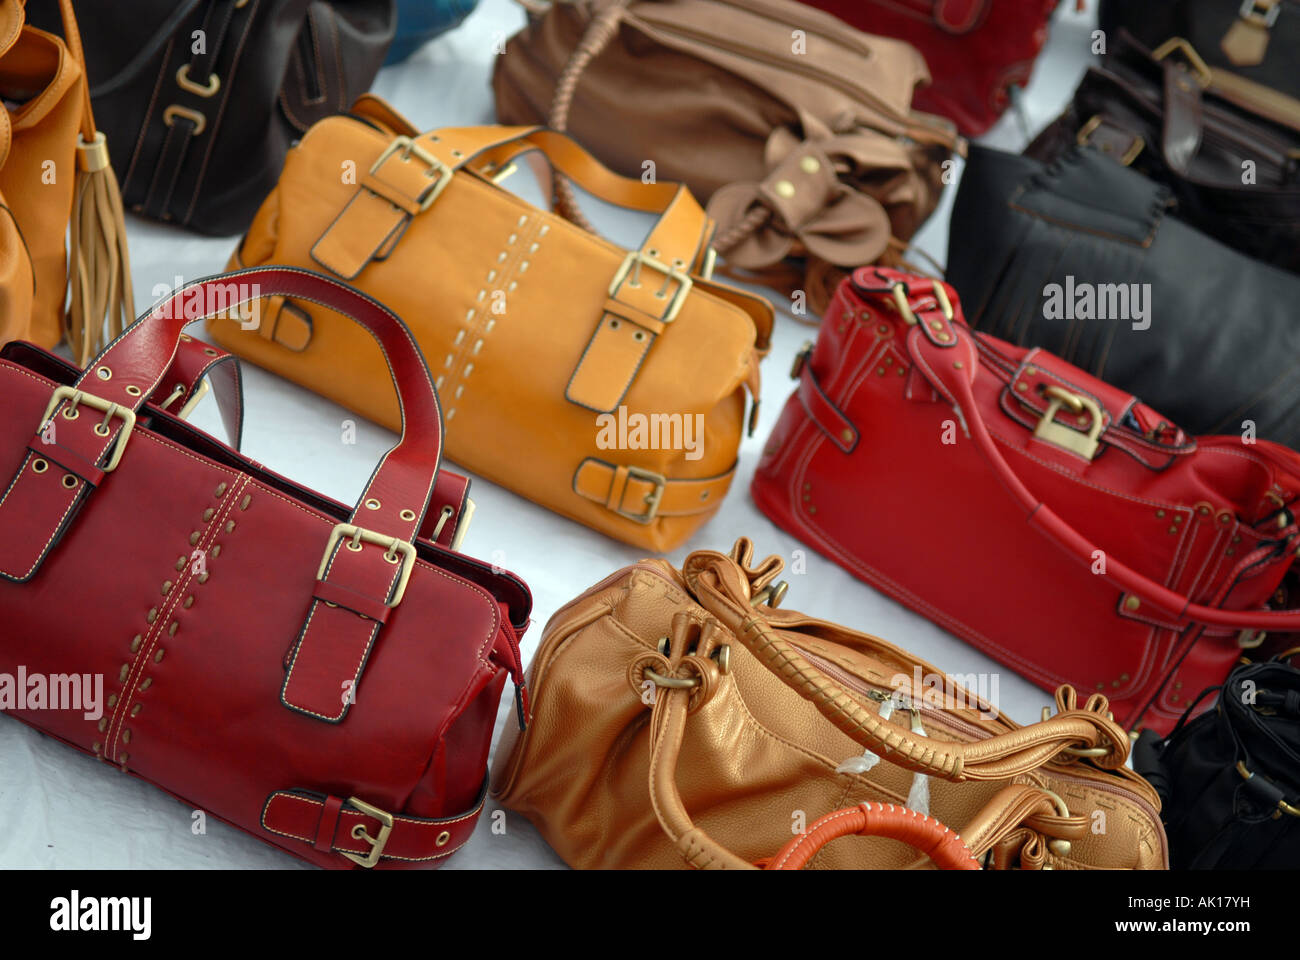 Fake designer bags fotografías e imágenes de alta resolución - Alamy